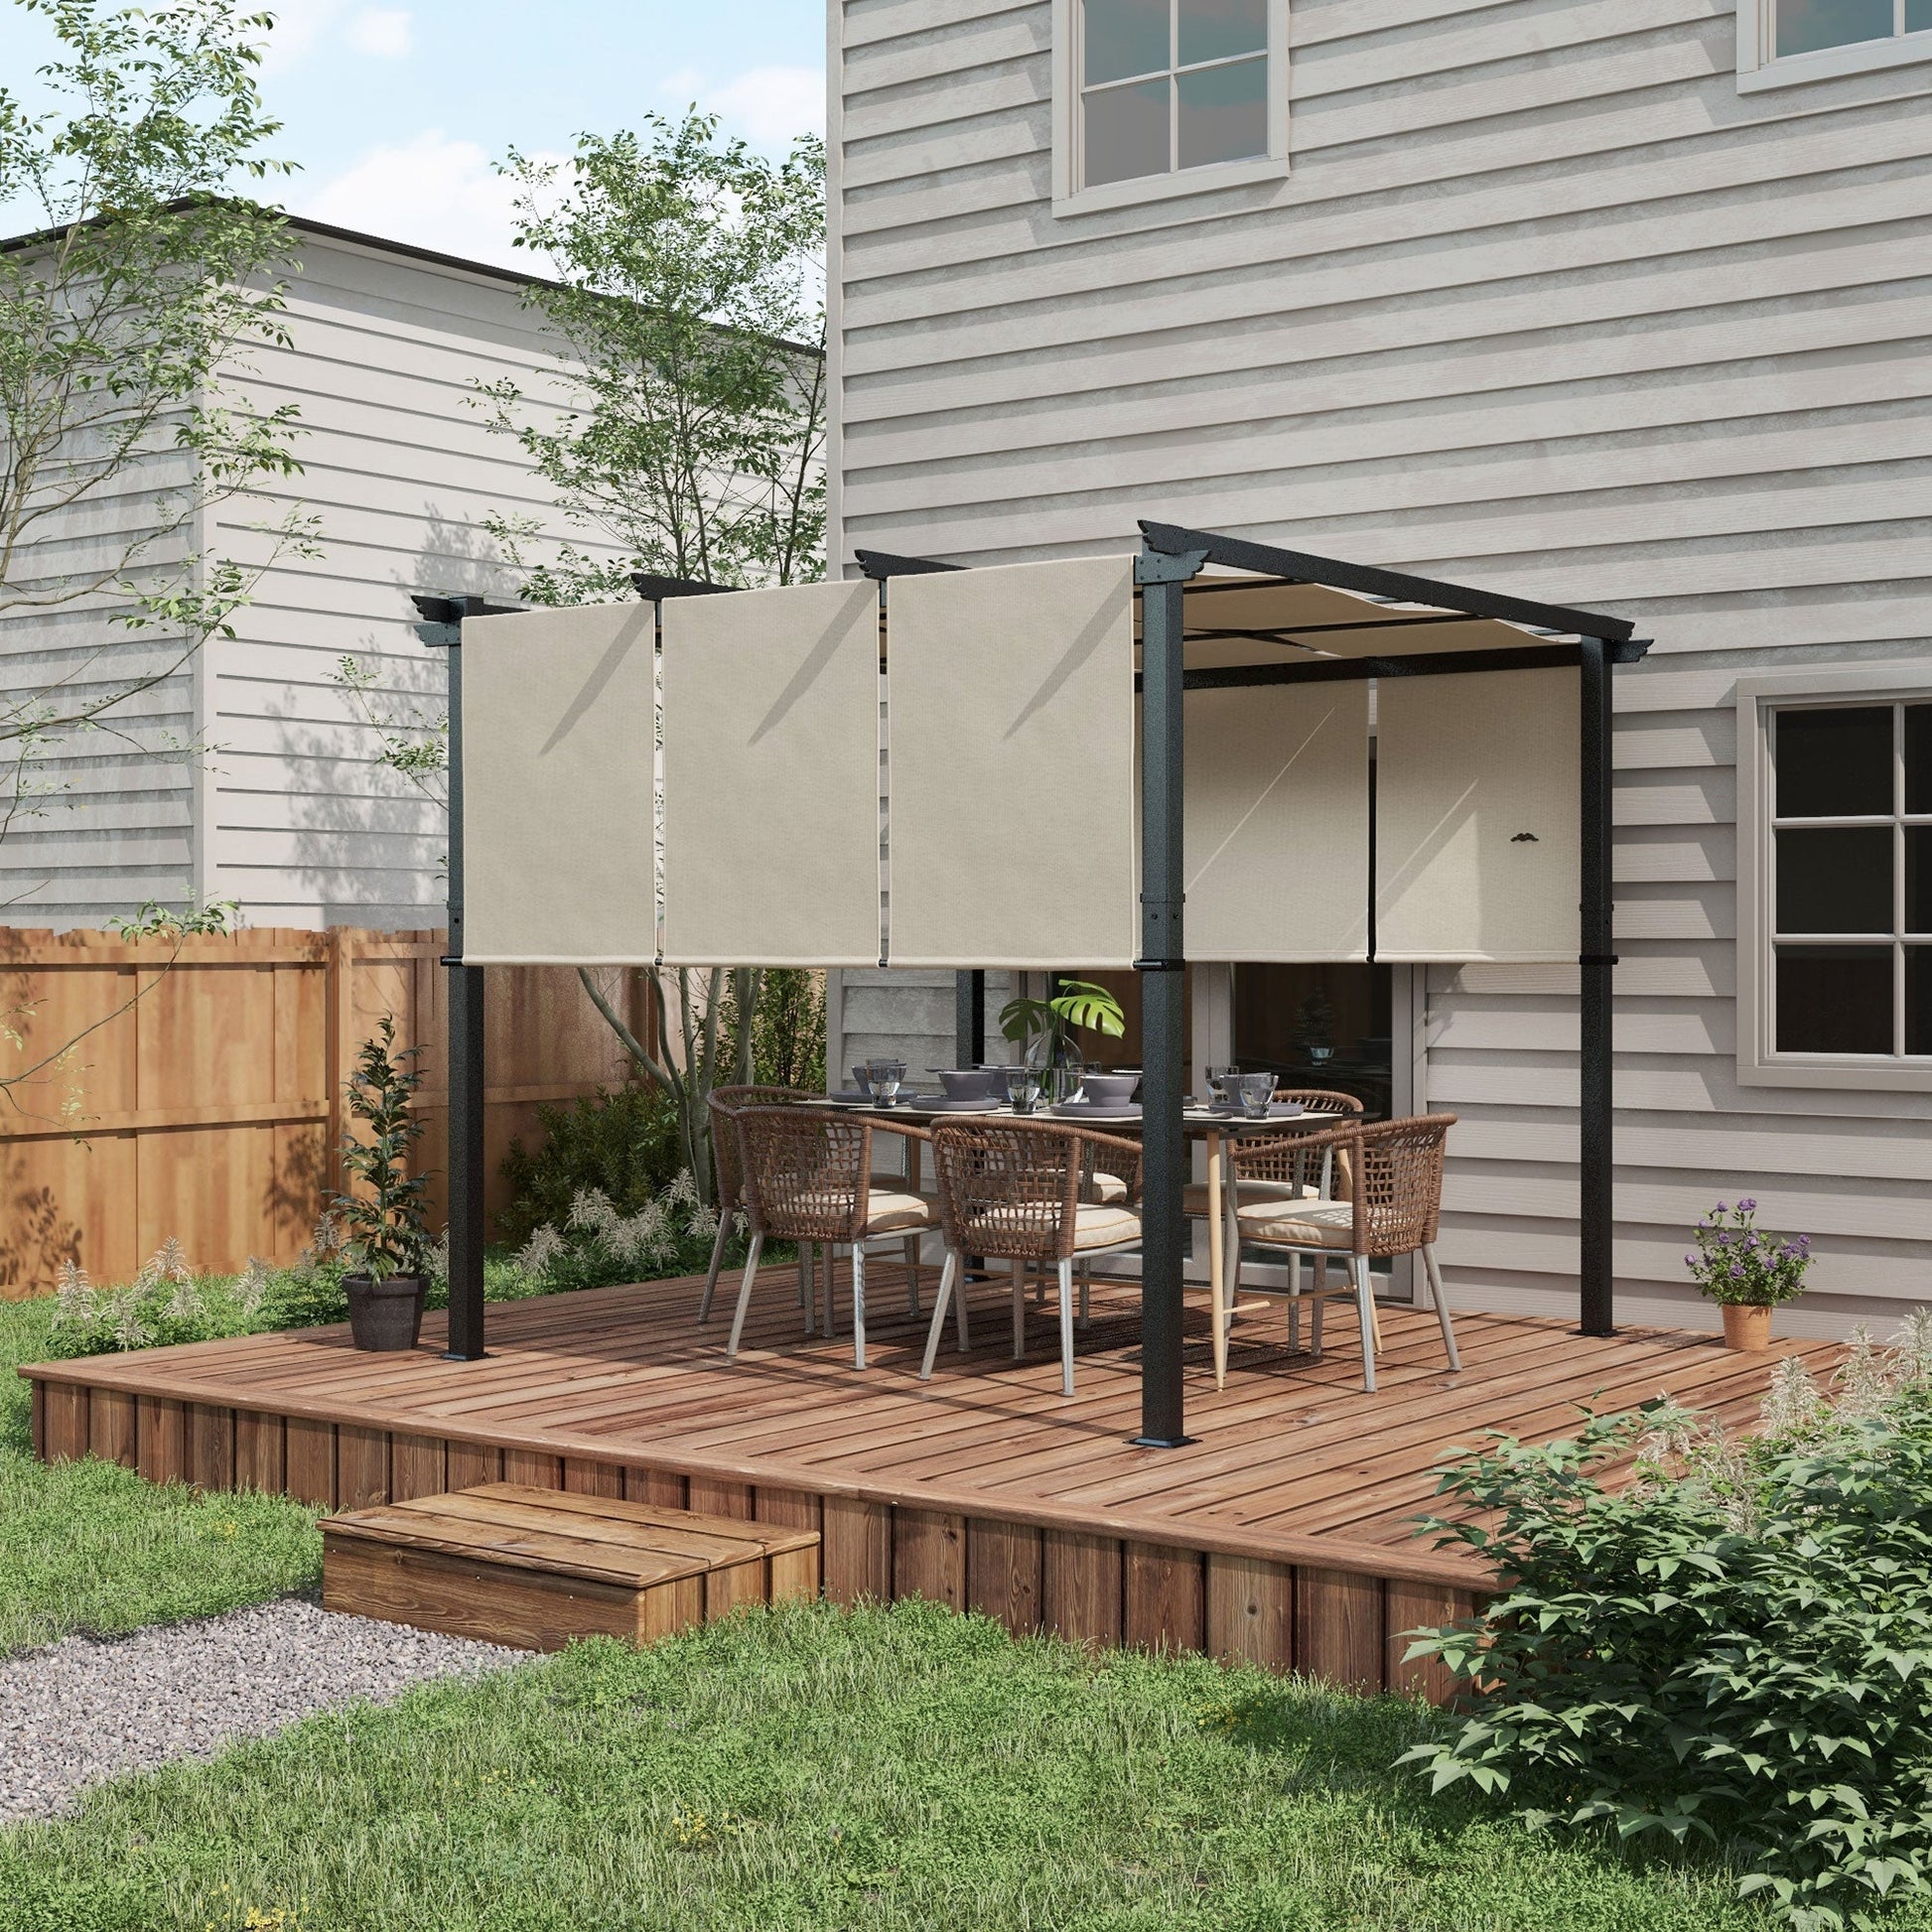 10' x 10' Metal Pergola, Outdoor Pergola with Retractable Canopy, for Garden, Patio, Backyard, Deck - Gallery Canada